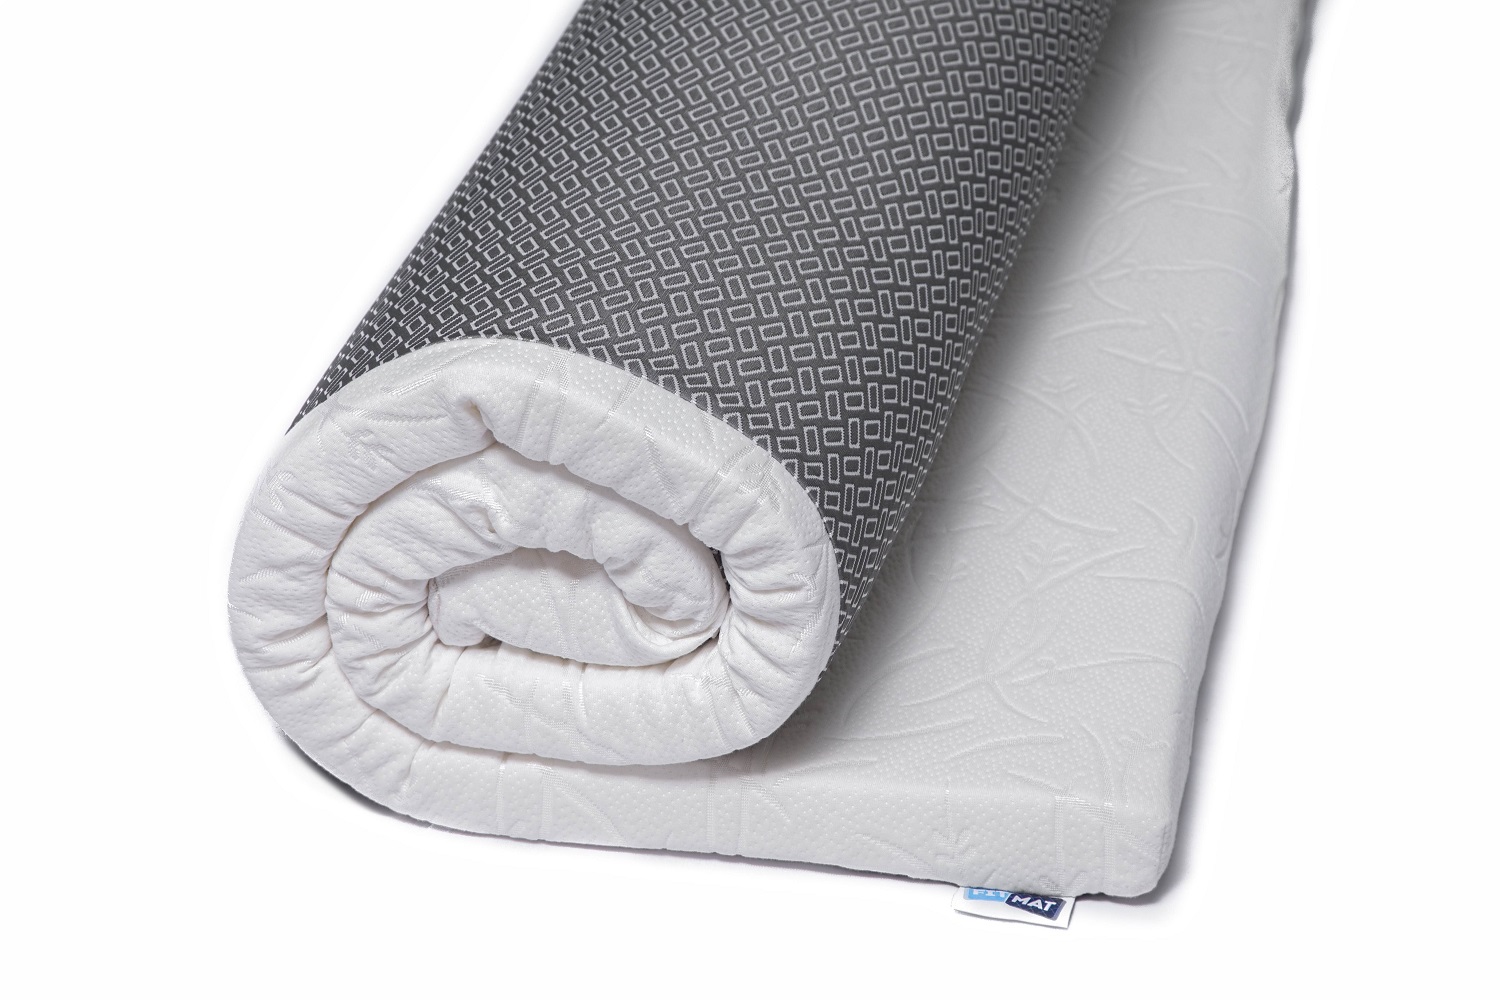 orthopedic gel foam mattress topper reviews